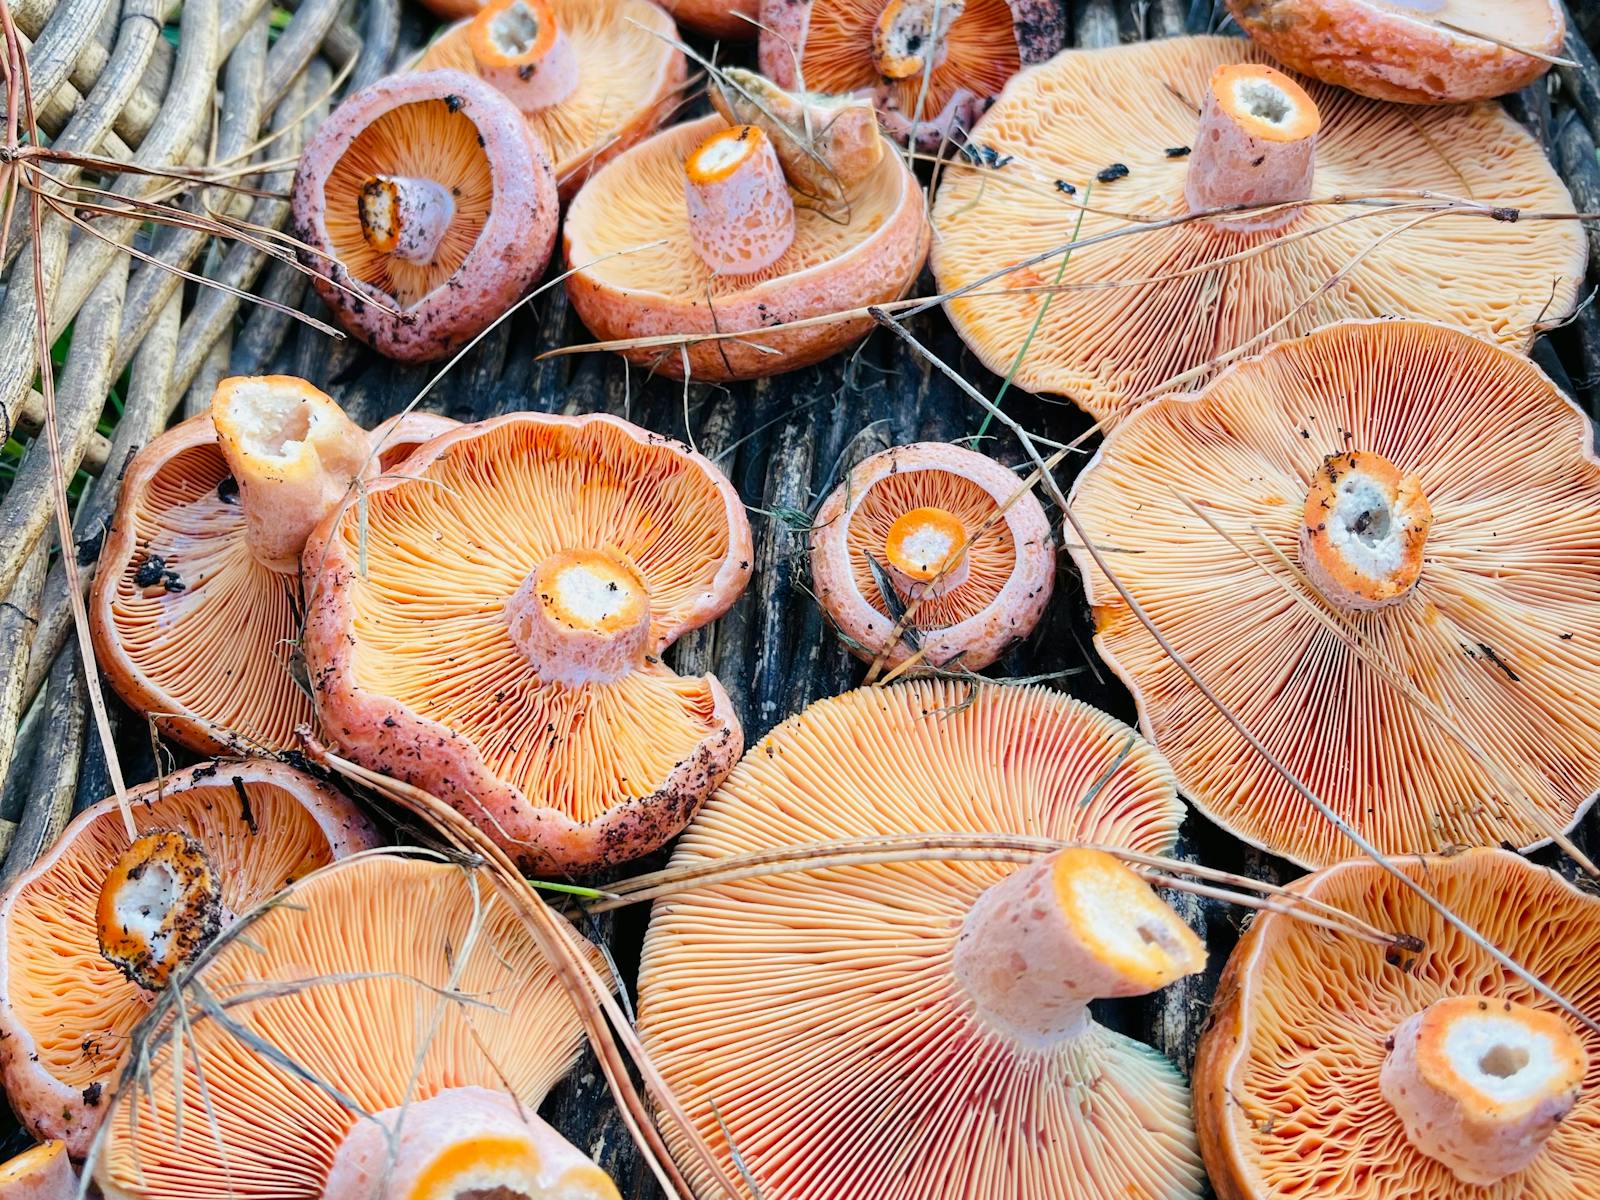 A basket of saffron milk cap mushrooms